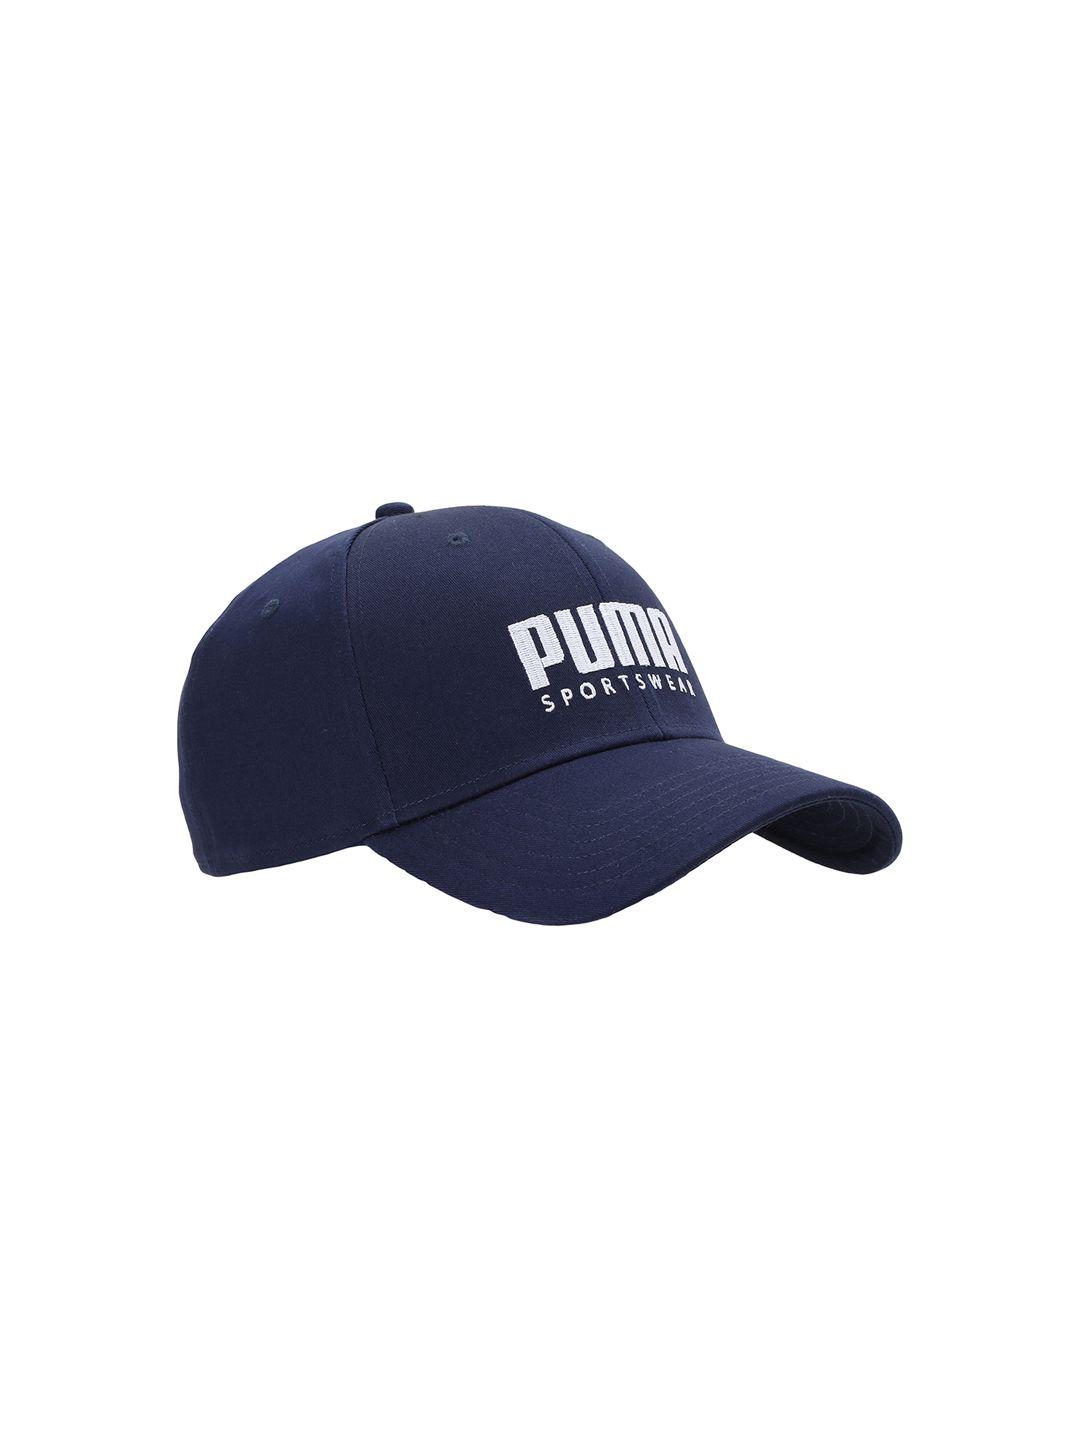 puma unisex navy blue solid stretchfit baseball cap